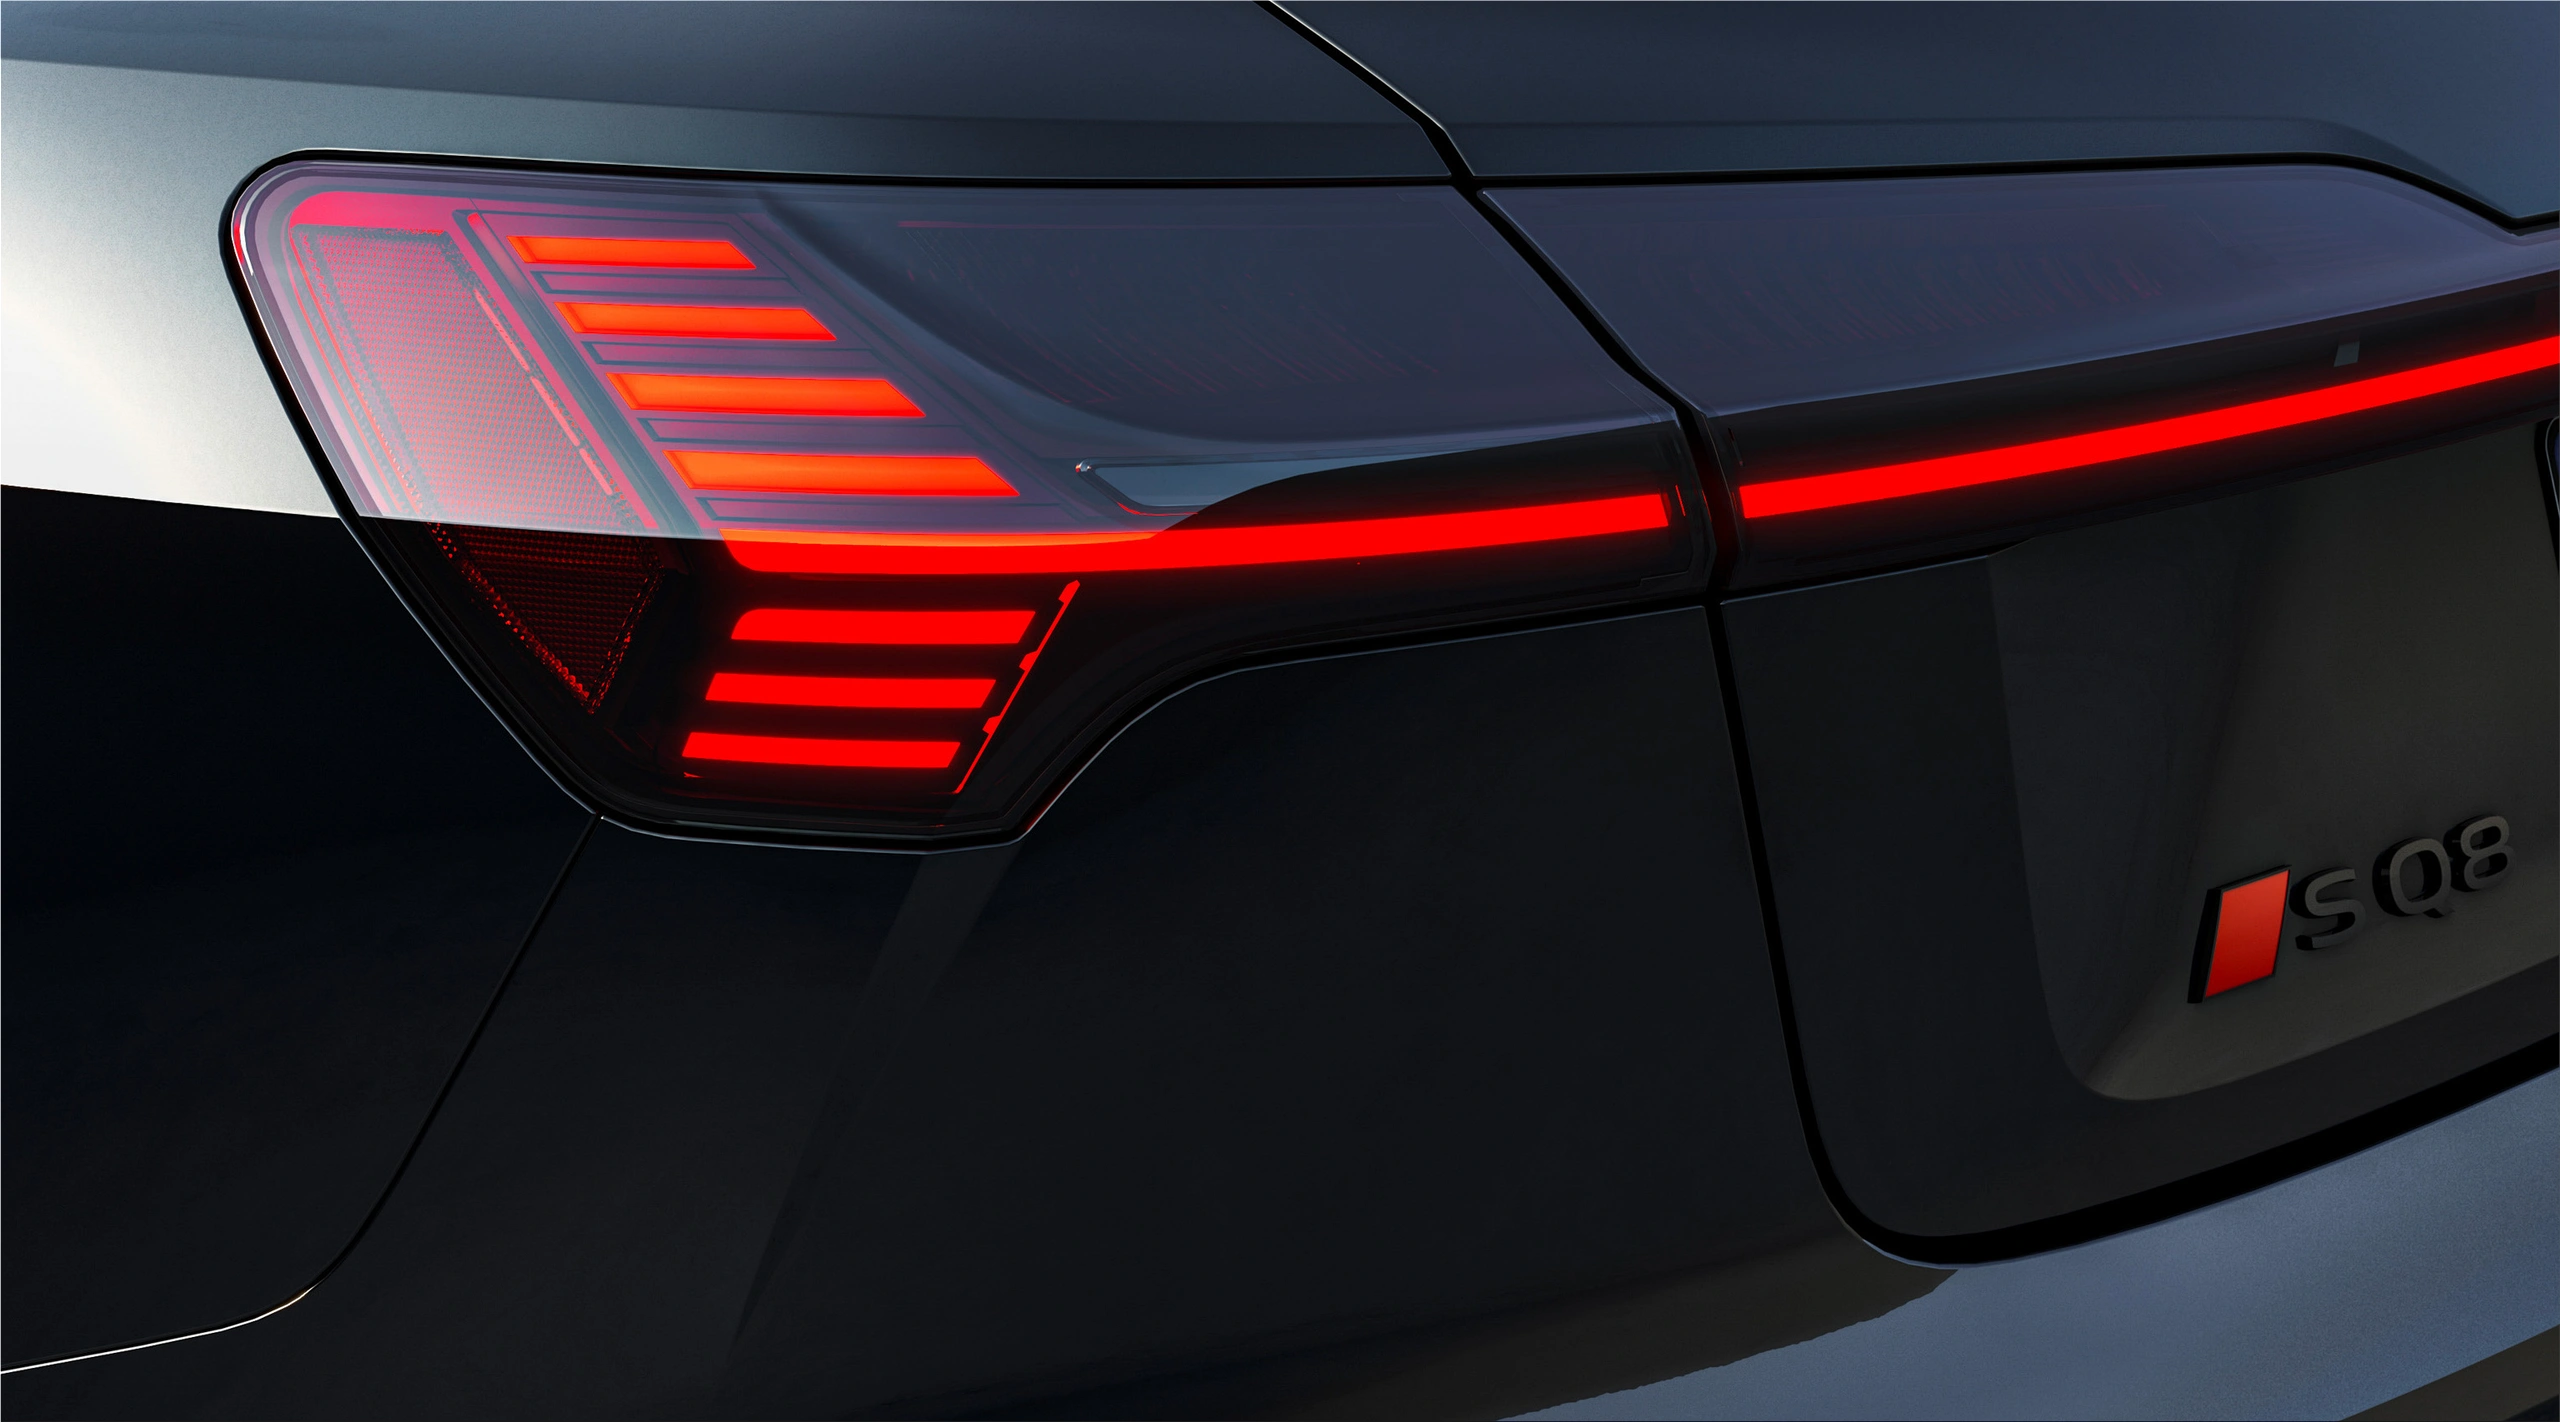 Electric Audi A4 E-Tron due by 2026 to rival Tesla Model 3